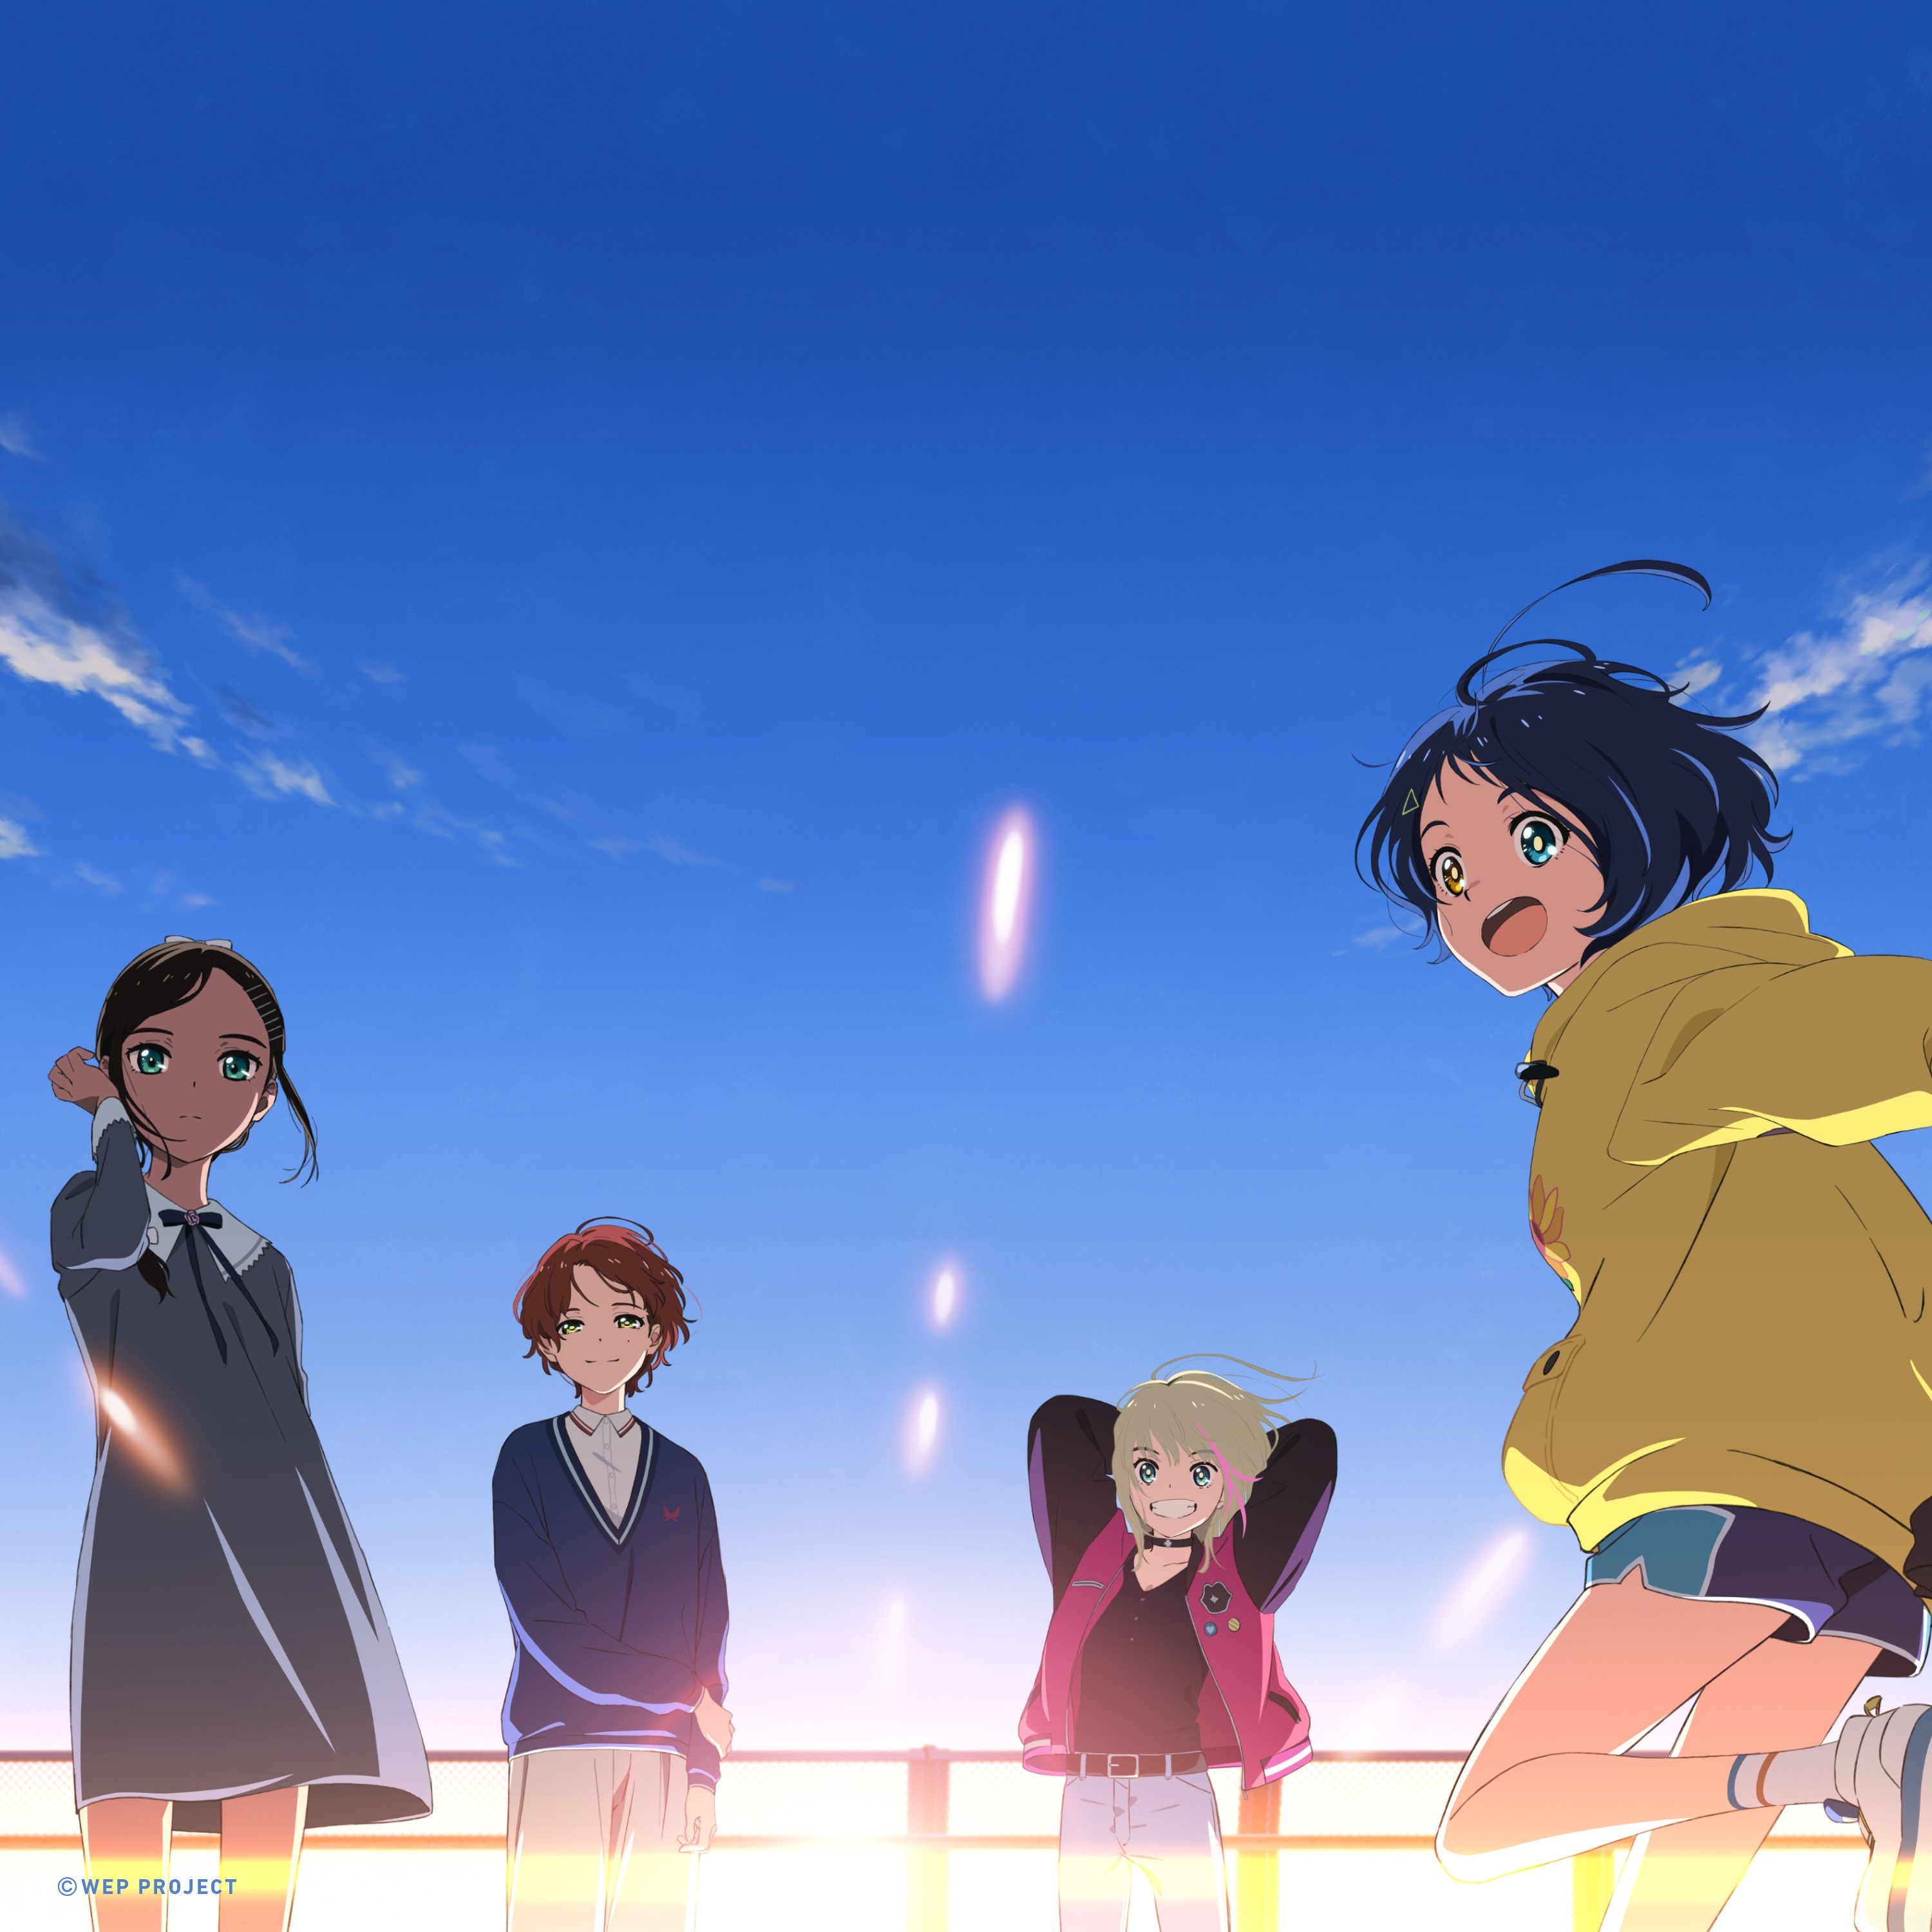 Top 15 Anime Similar to Wonder Egg Priority - In atmosphere, plot